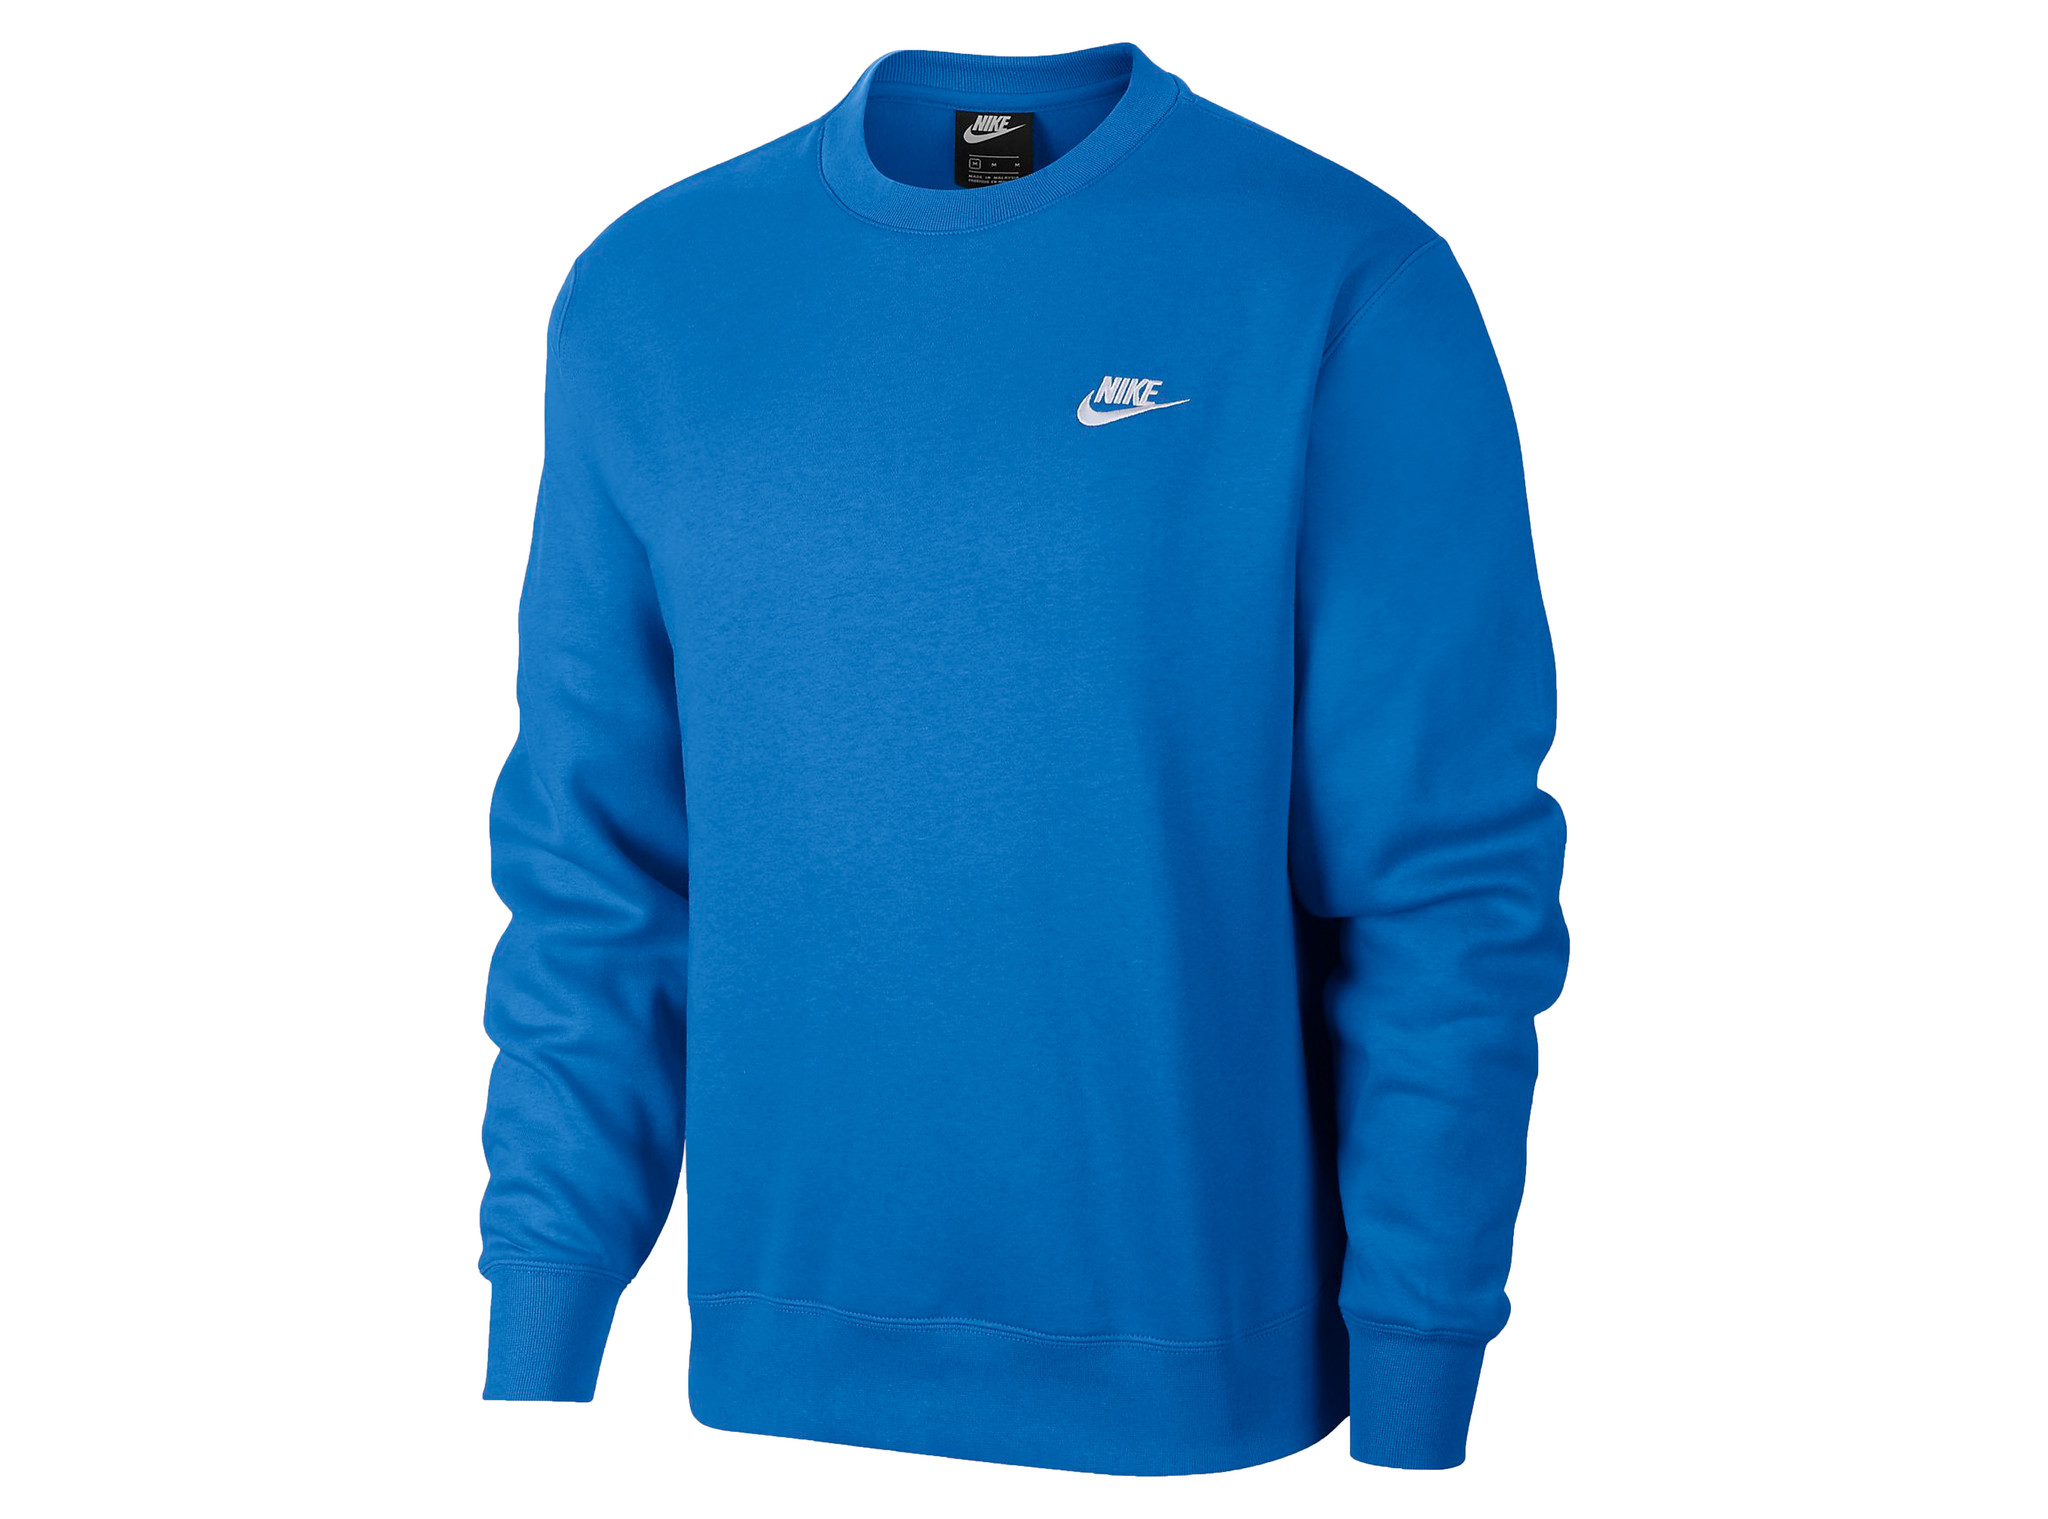 pacific blue nike sweatshirt